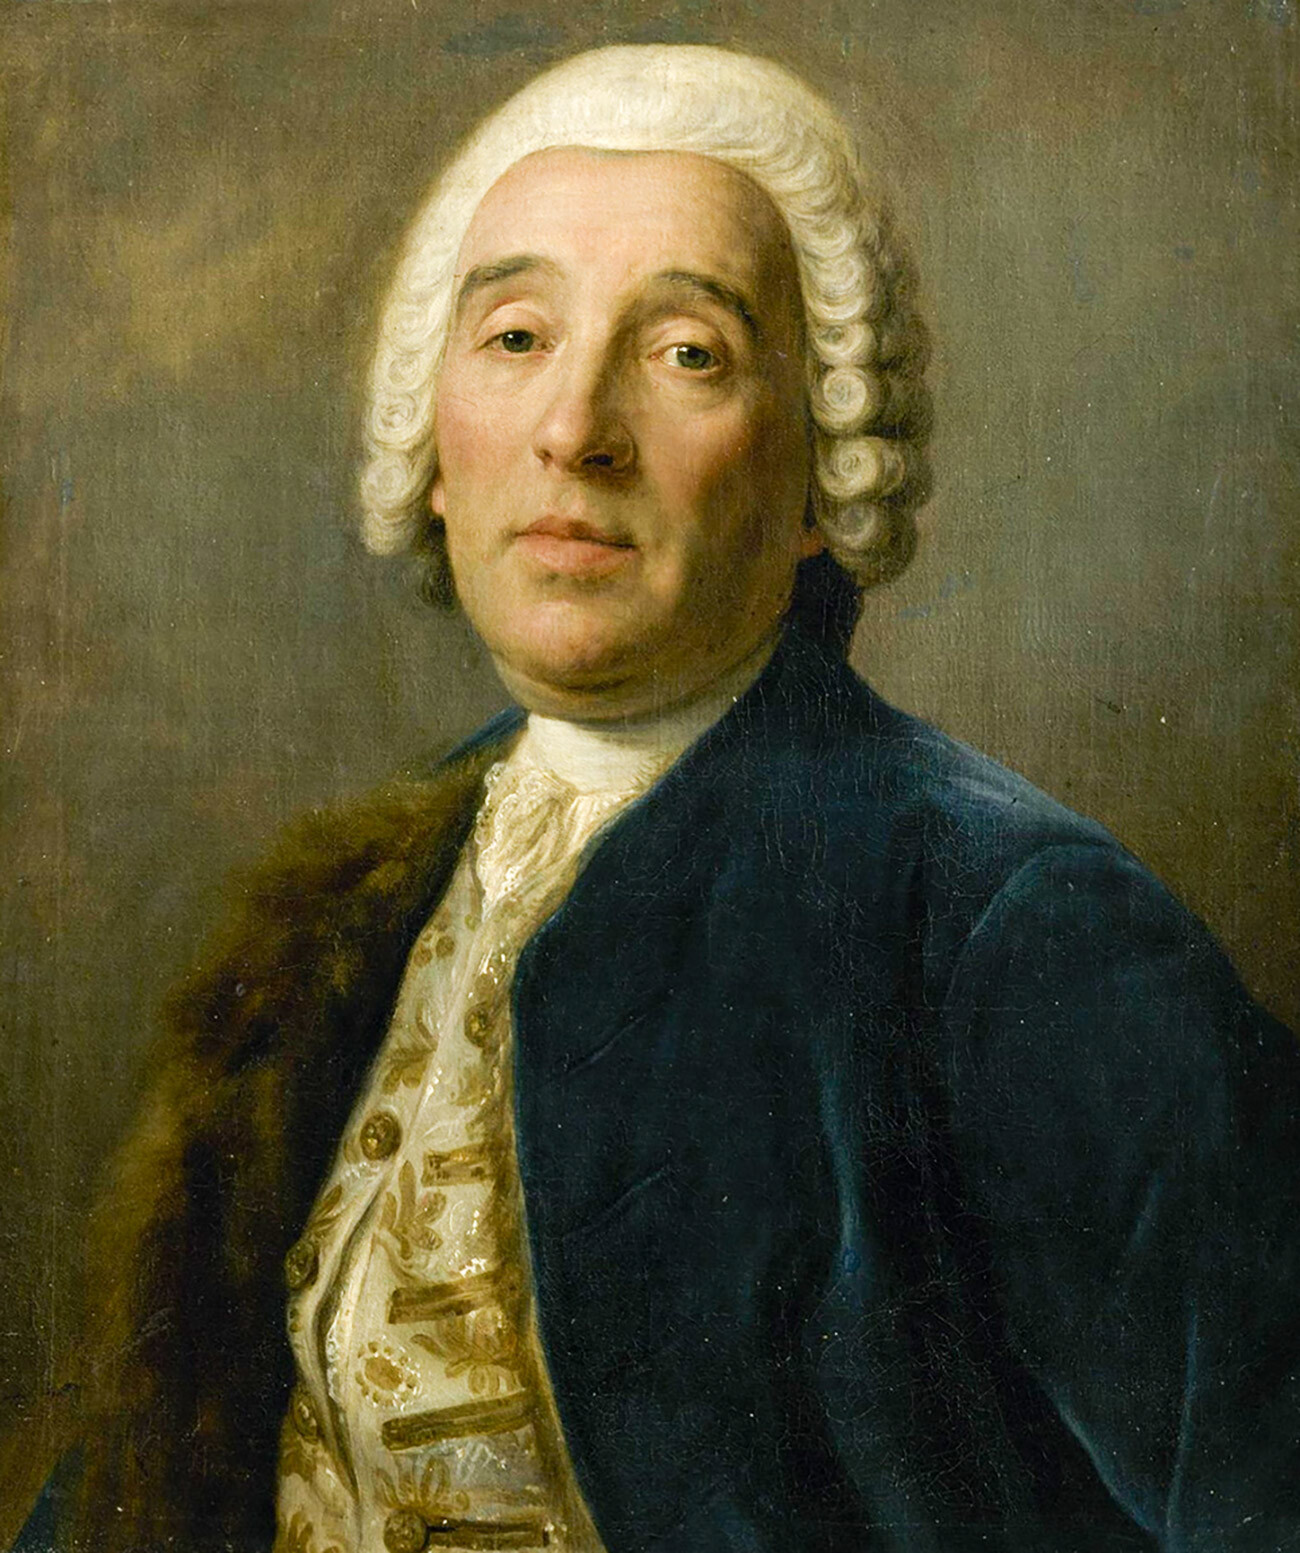 Porträt des Architekten Bartolomeo Rastrelli (um 1700-1771) von Pietro Antonio Rotari.